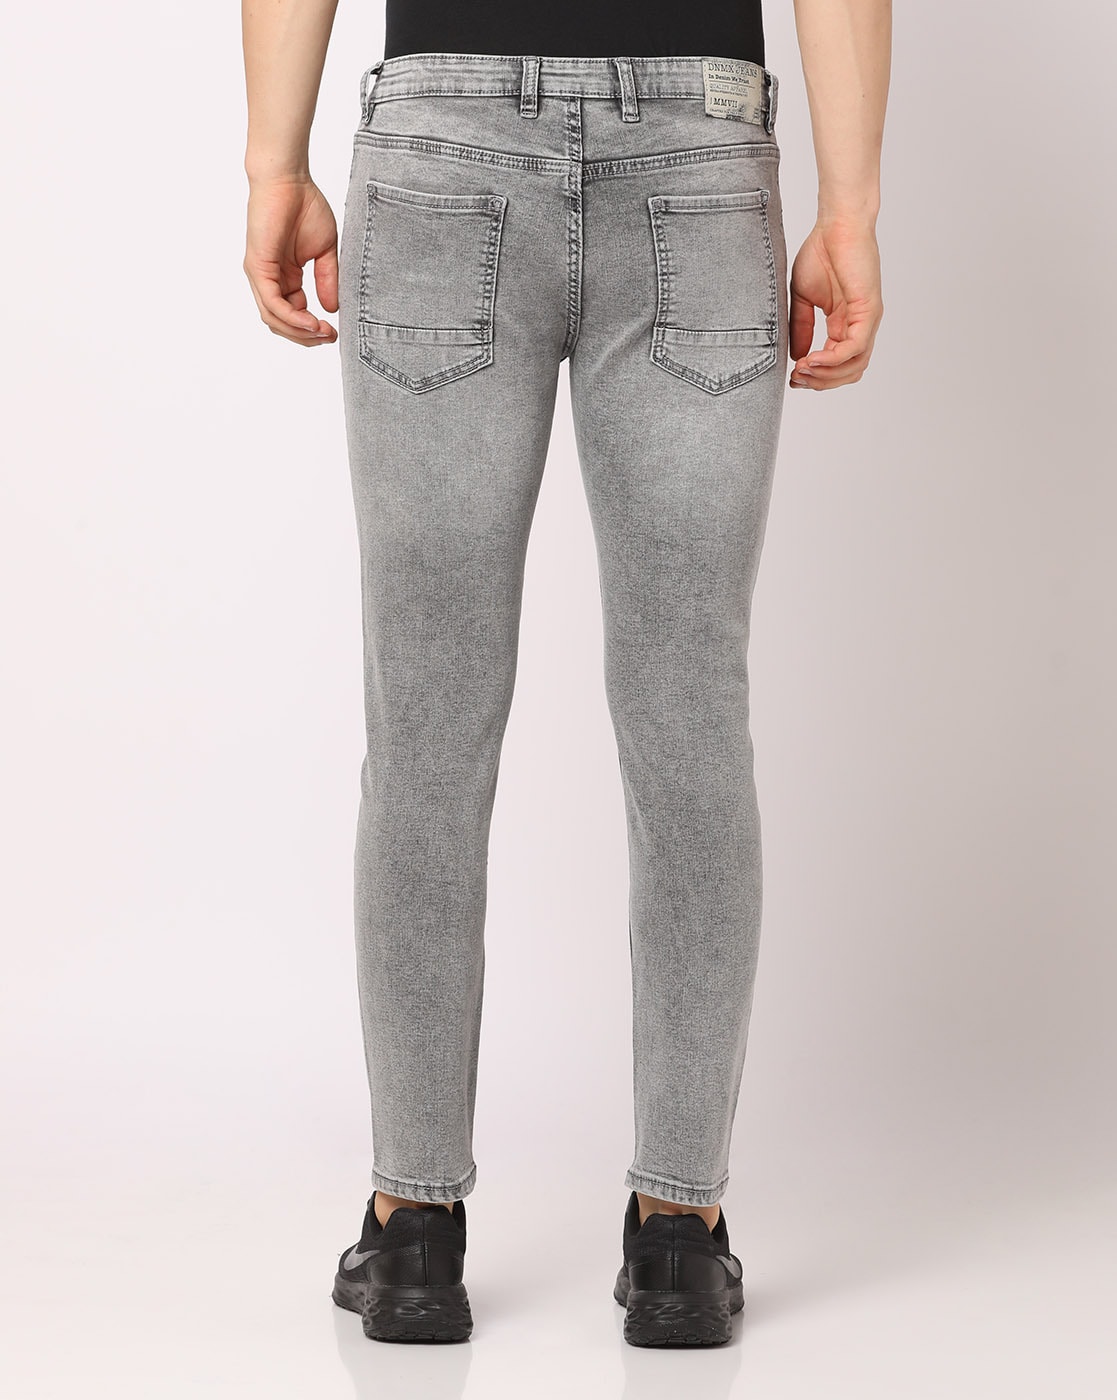 New collection cross pockets jeans -500/-only Size-30-32-34-36 Visit  shop-sai fashion-Balitha-vapi Col-9924812896 | Instagram